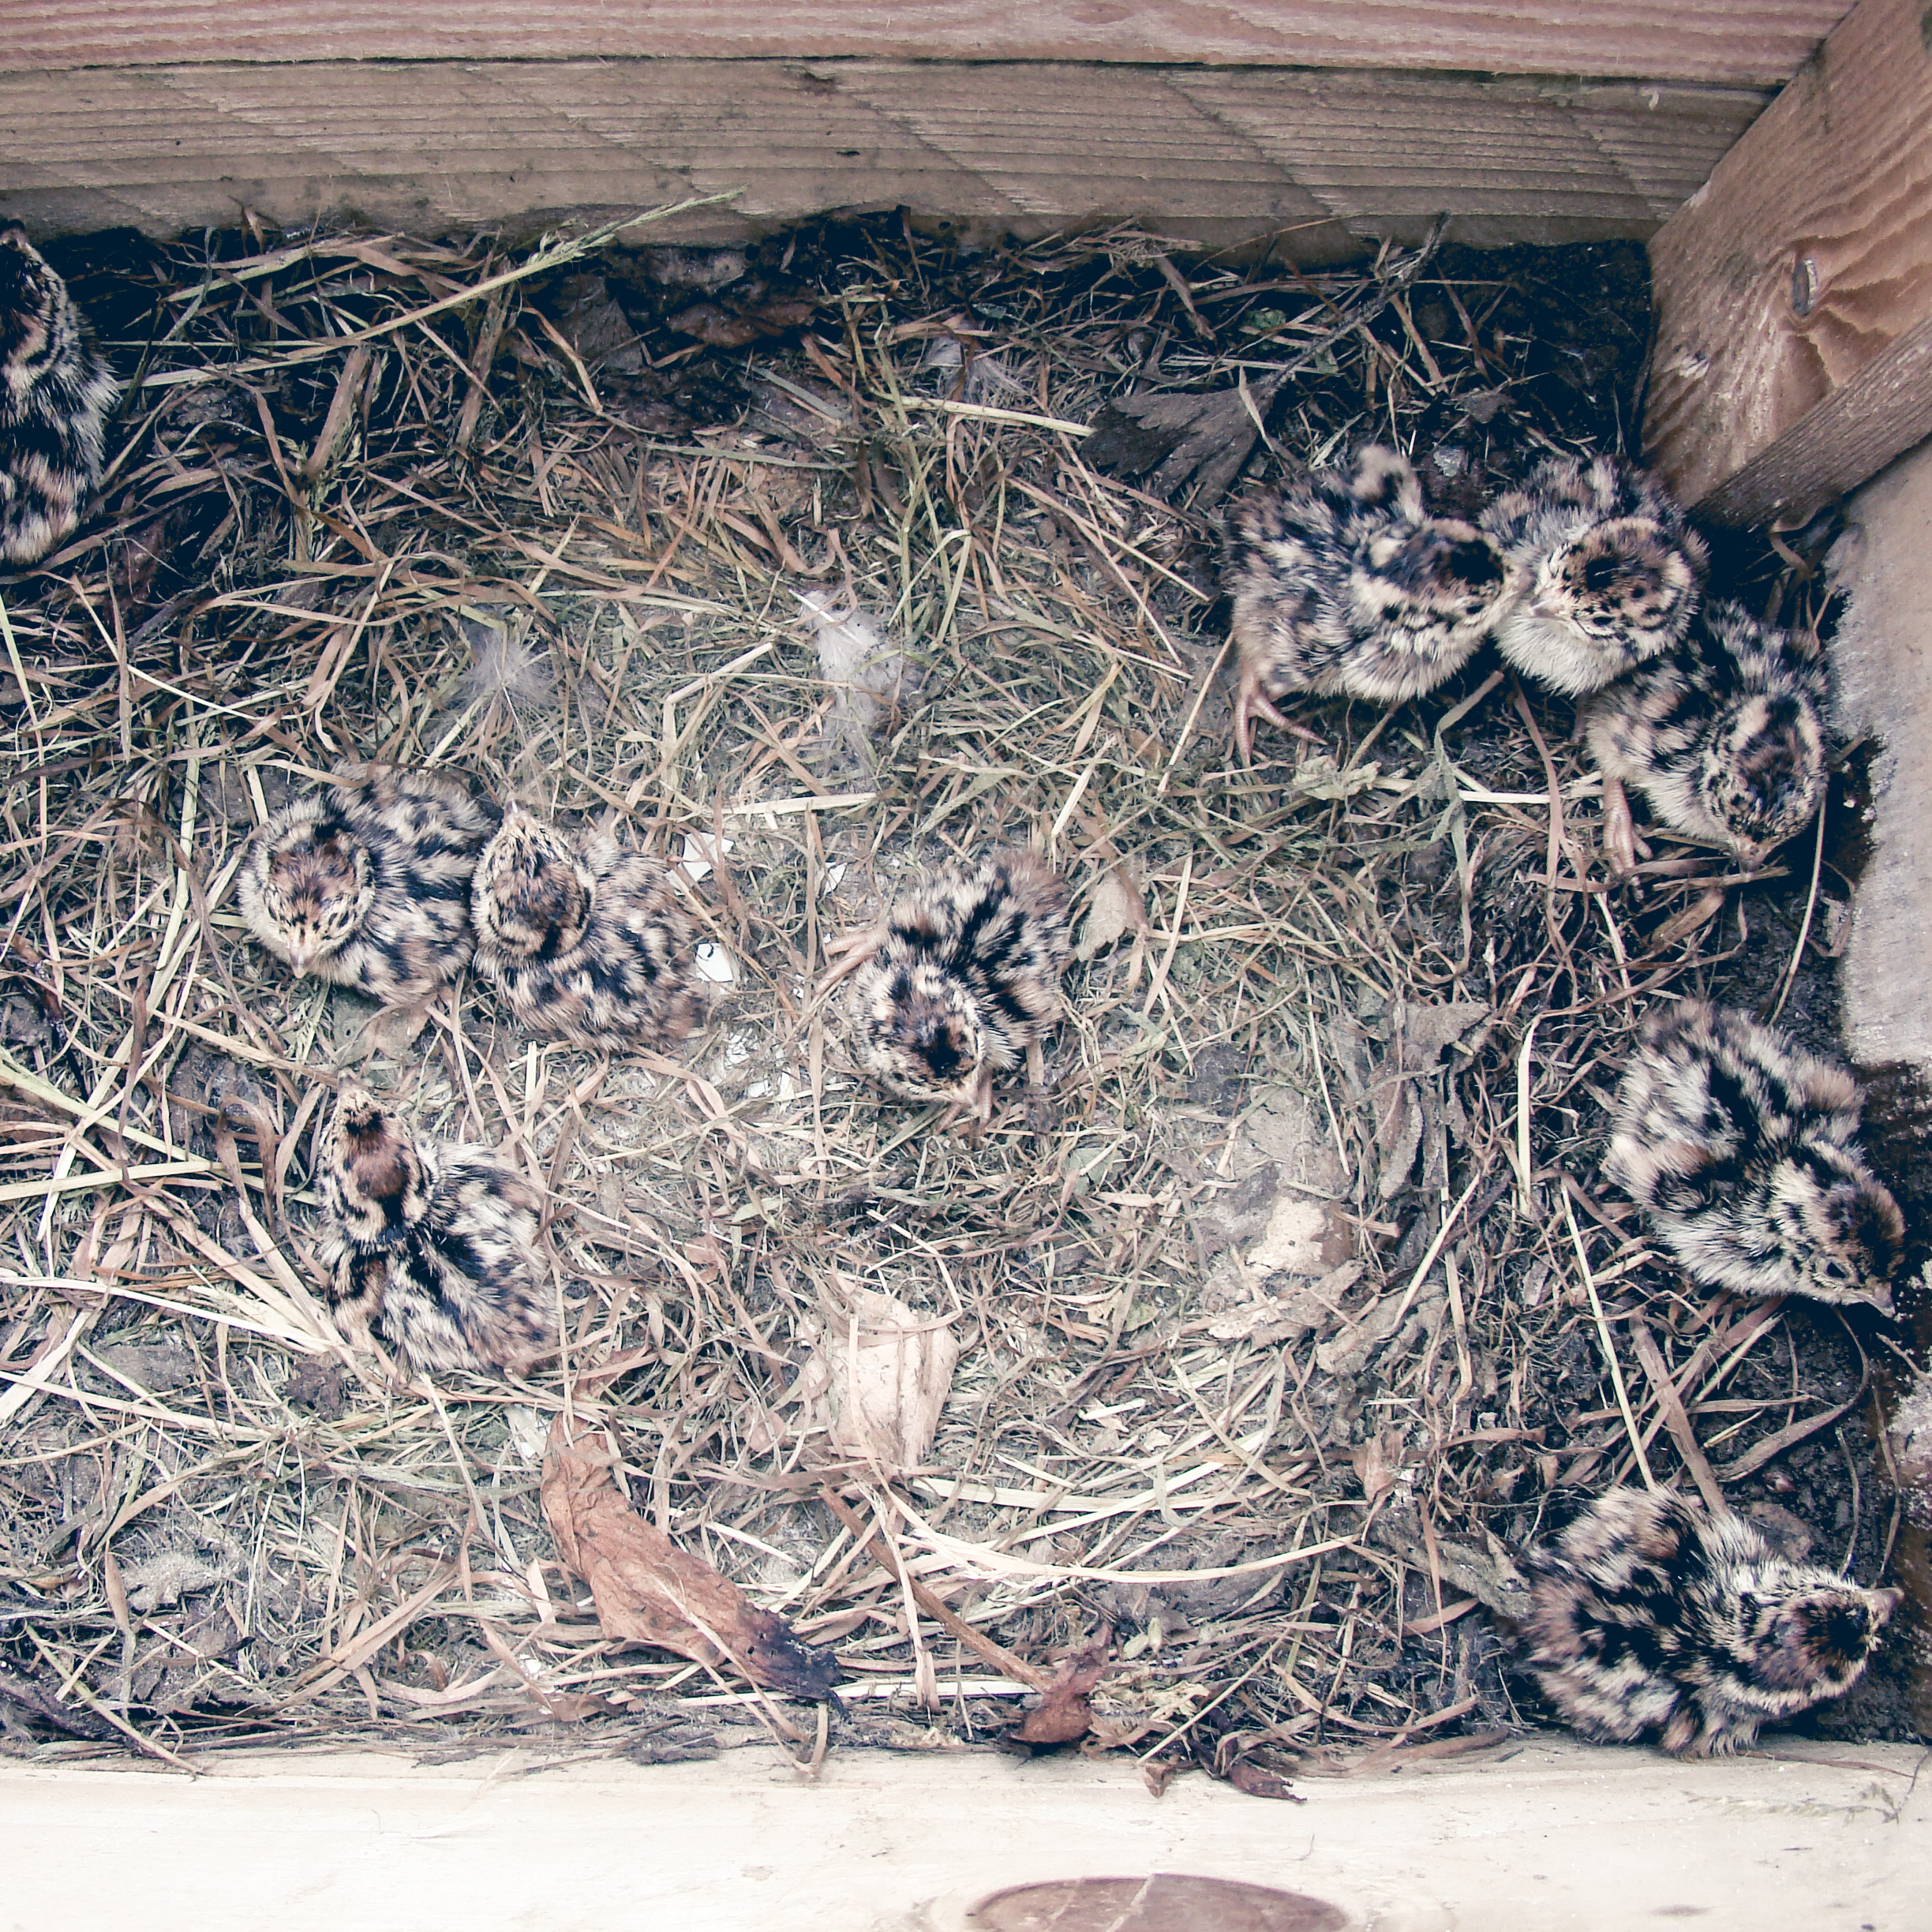 Hatched chicks 2014.jpg